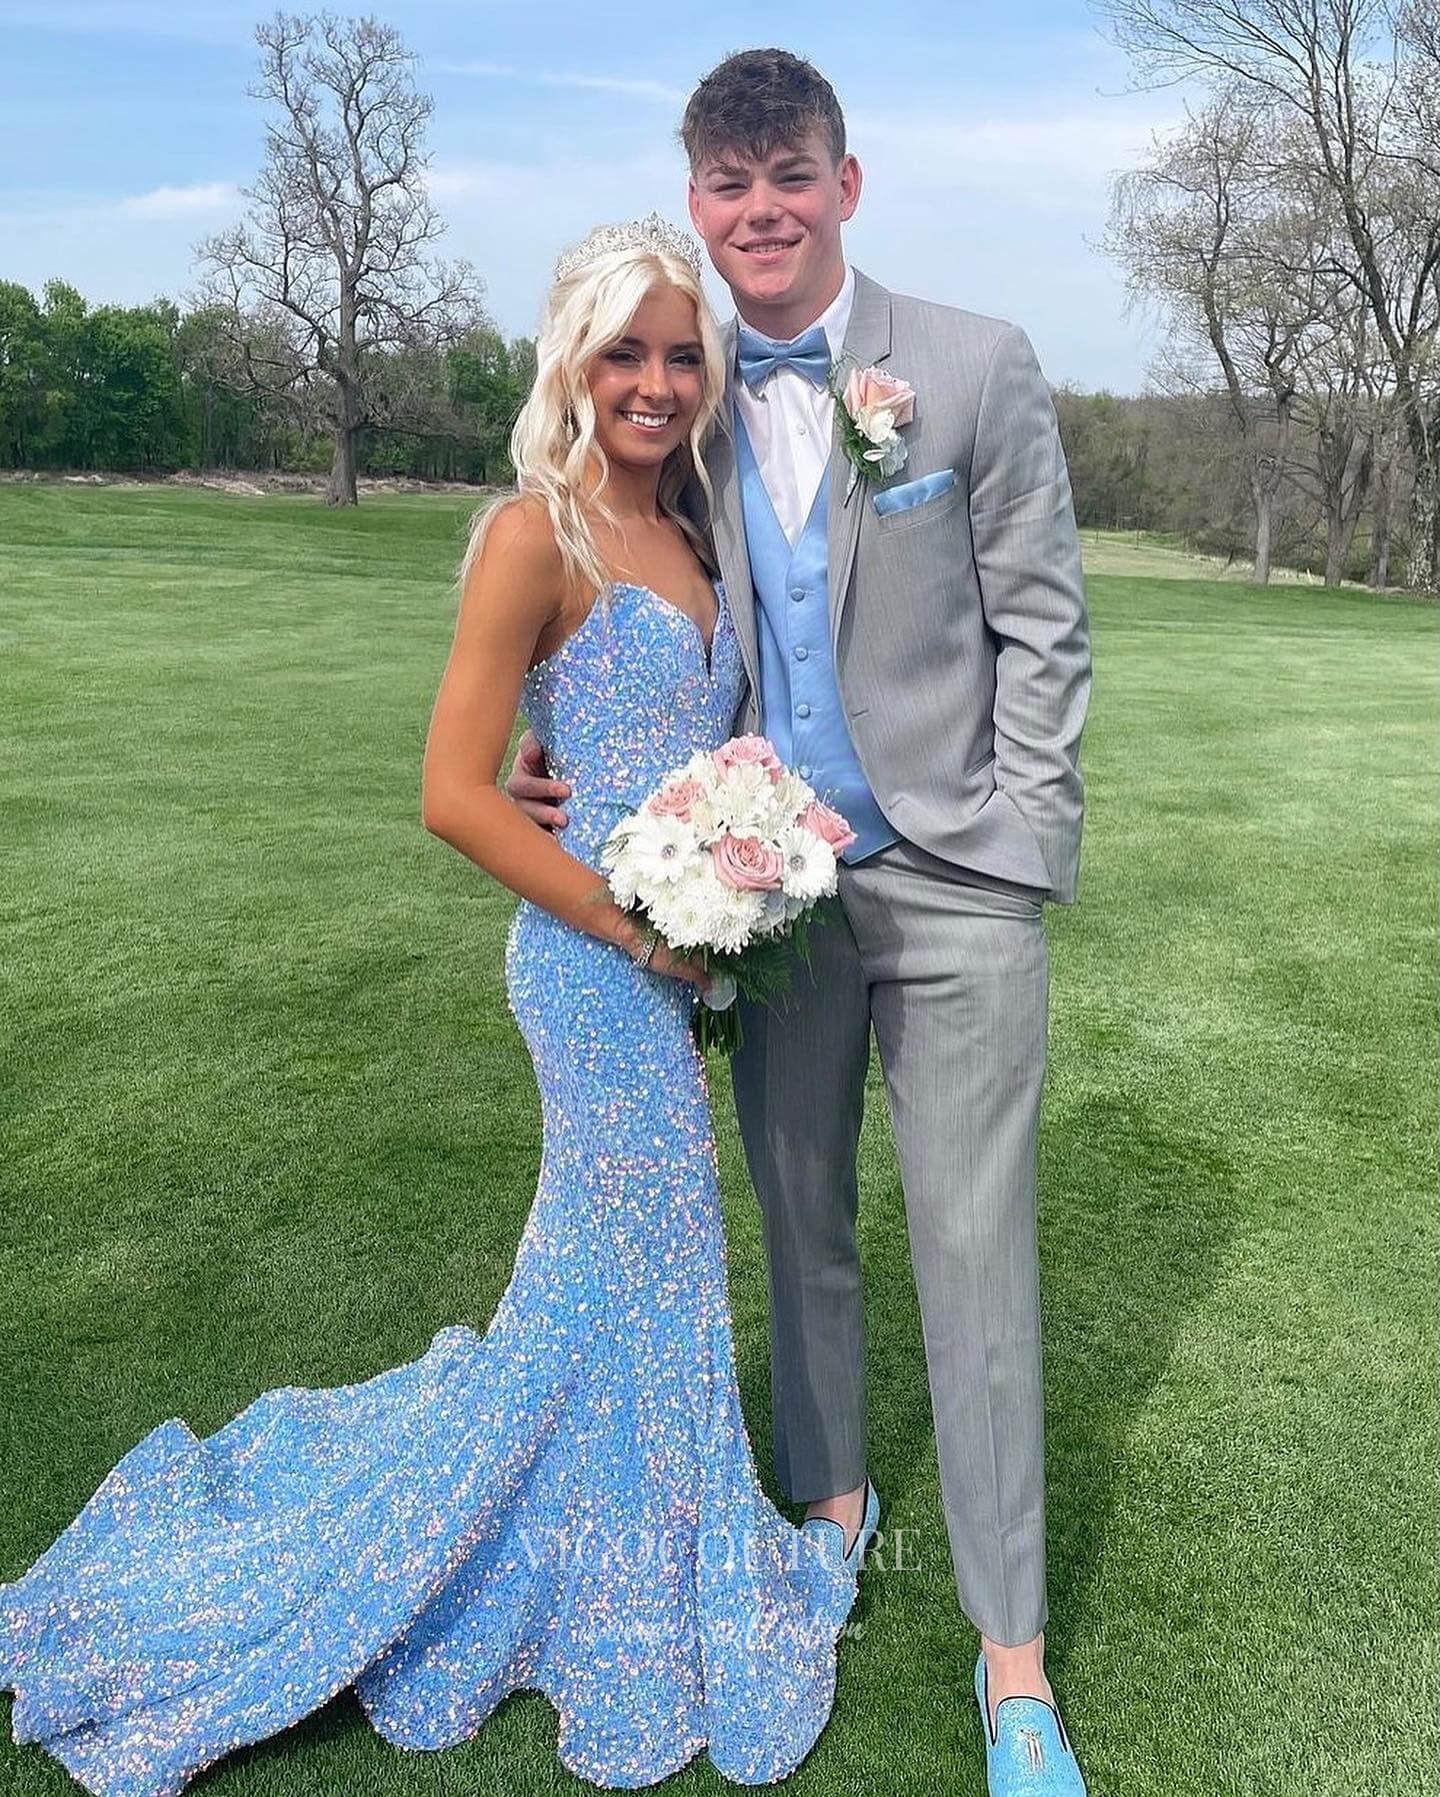 baby blue prom dress